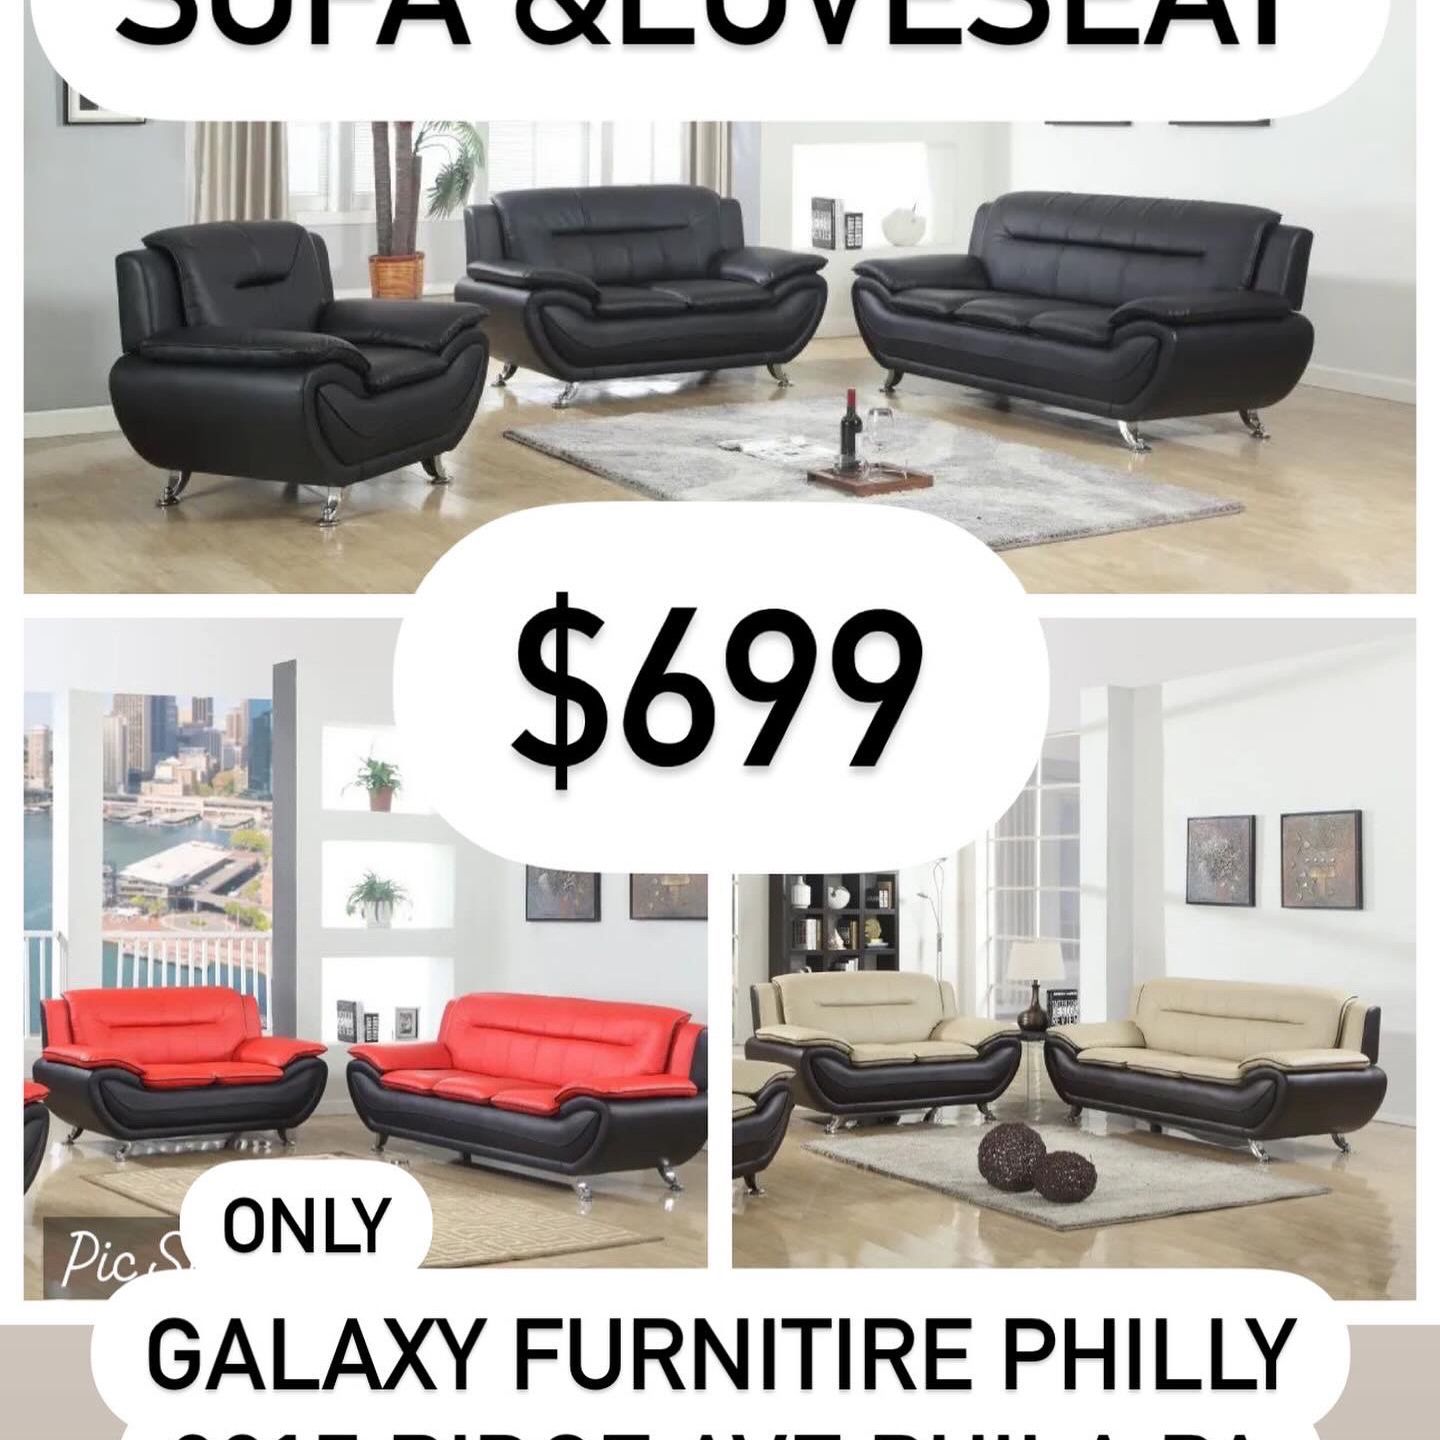 2 Pc Sofa & Loveseat $699